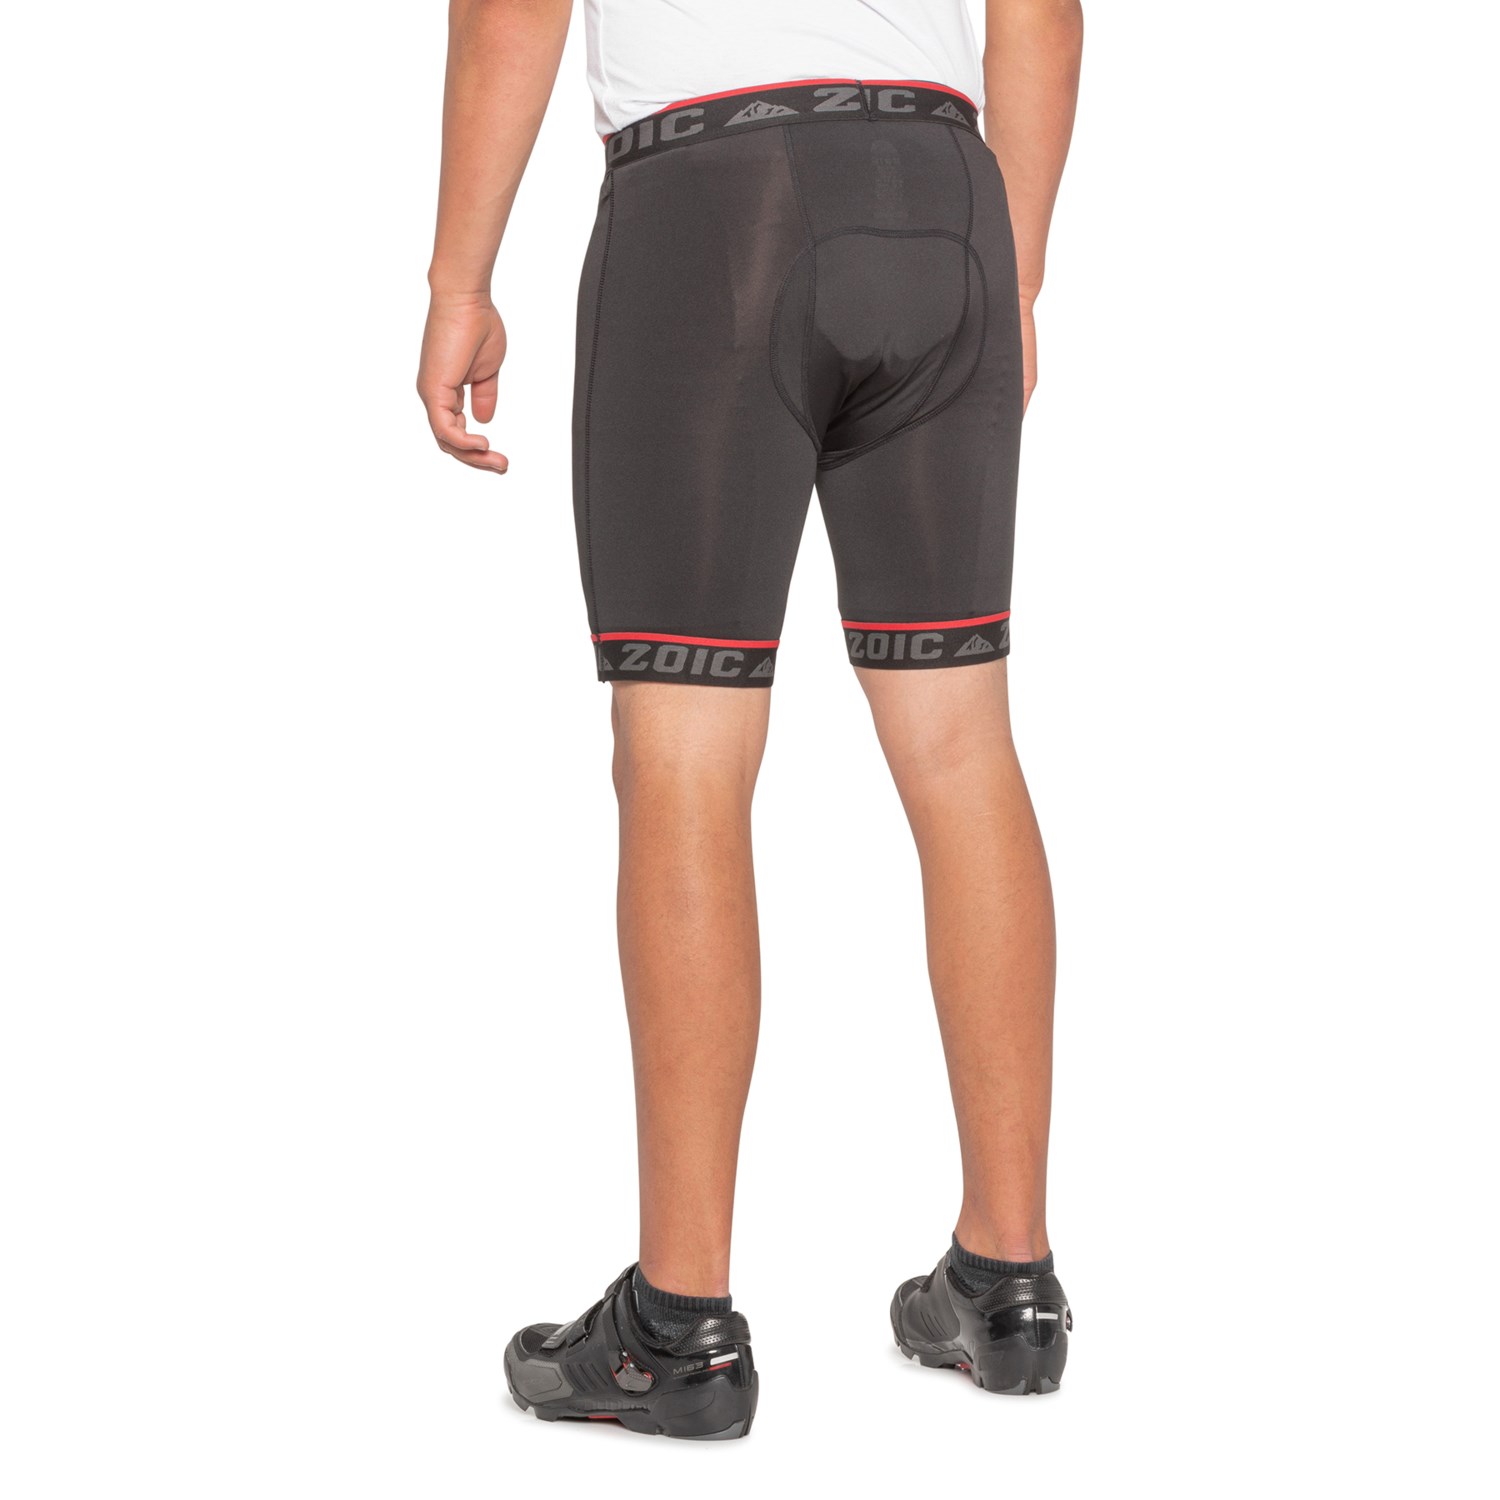 bikers shorts for men